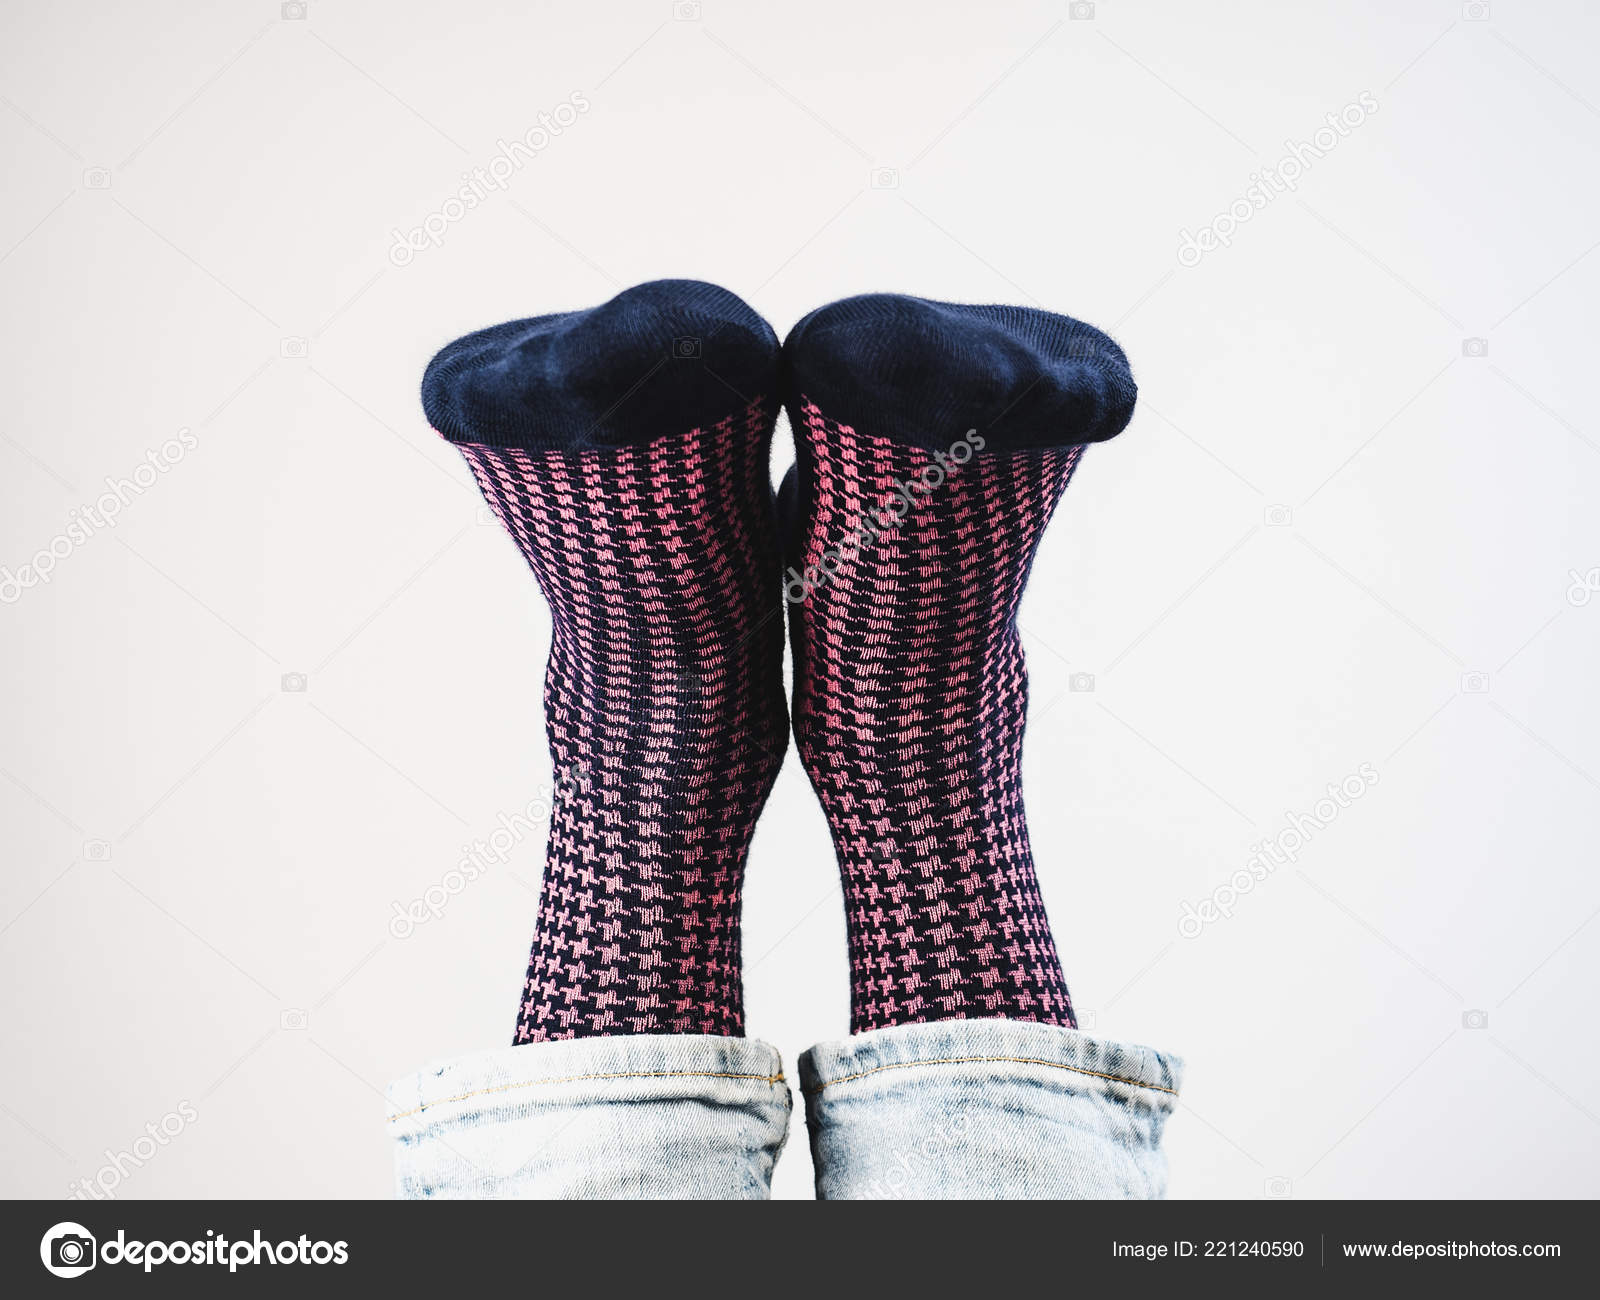 Funny socks Stock Photos, Royalty Free Funny socks Images | Depositphotos